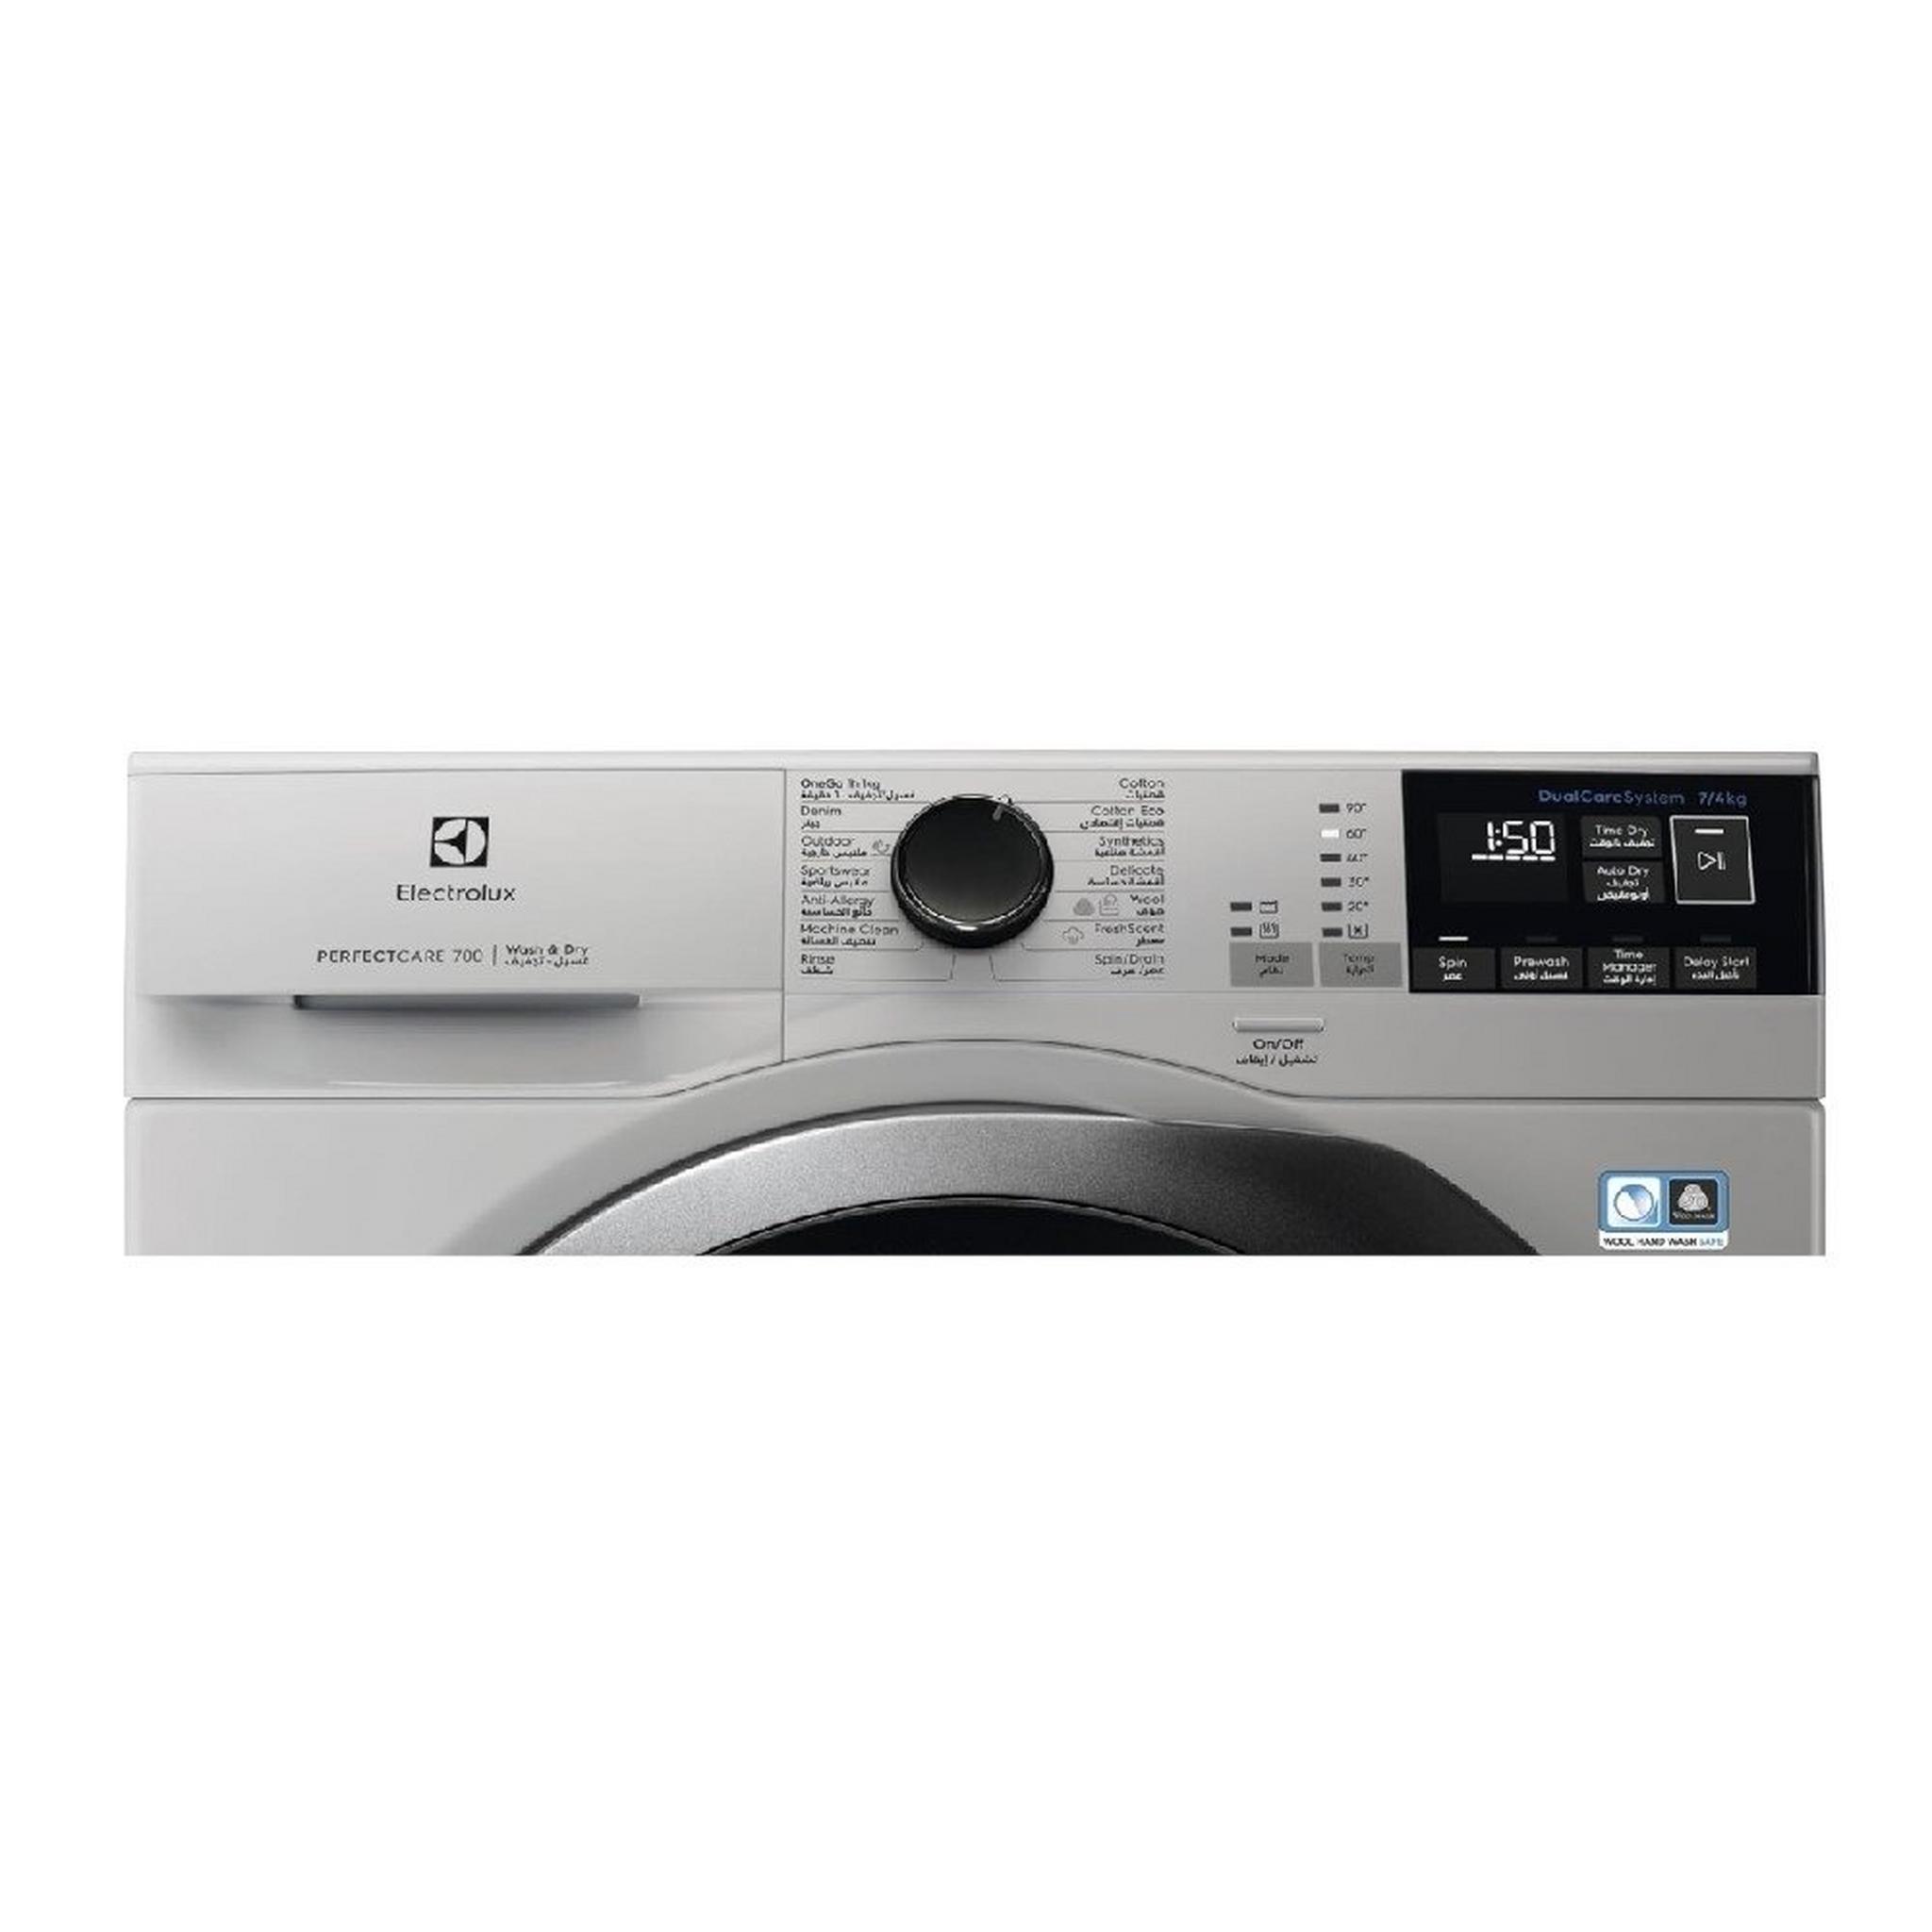 Electrolux Front Load Washing\Drying Machine, 10 Washing Capacity 6 Kg Washing Capacity, EW7W3164LS - Silver